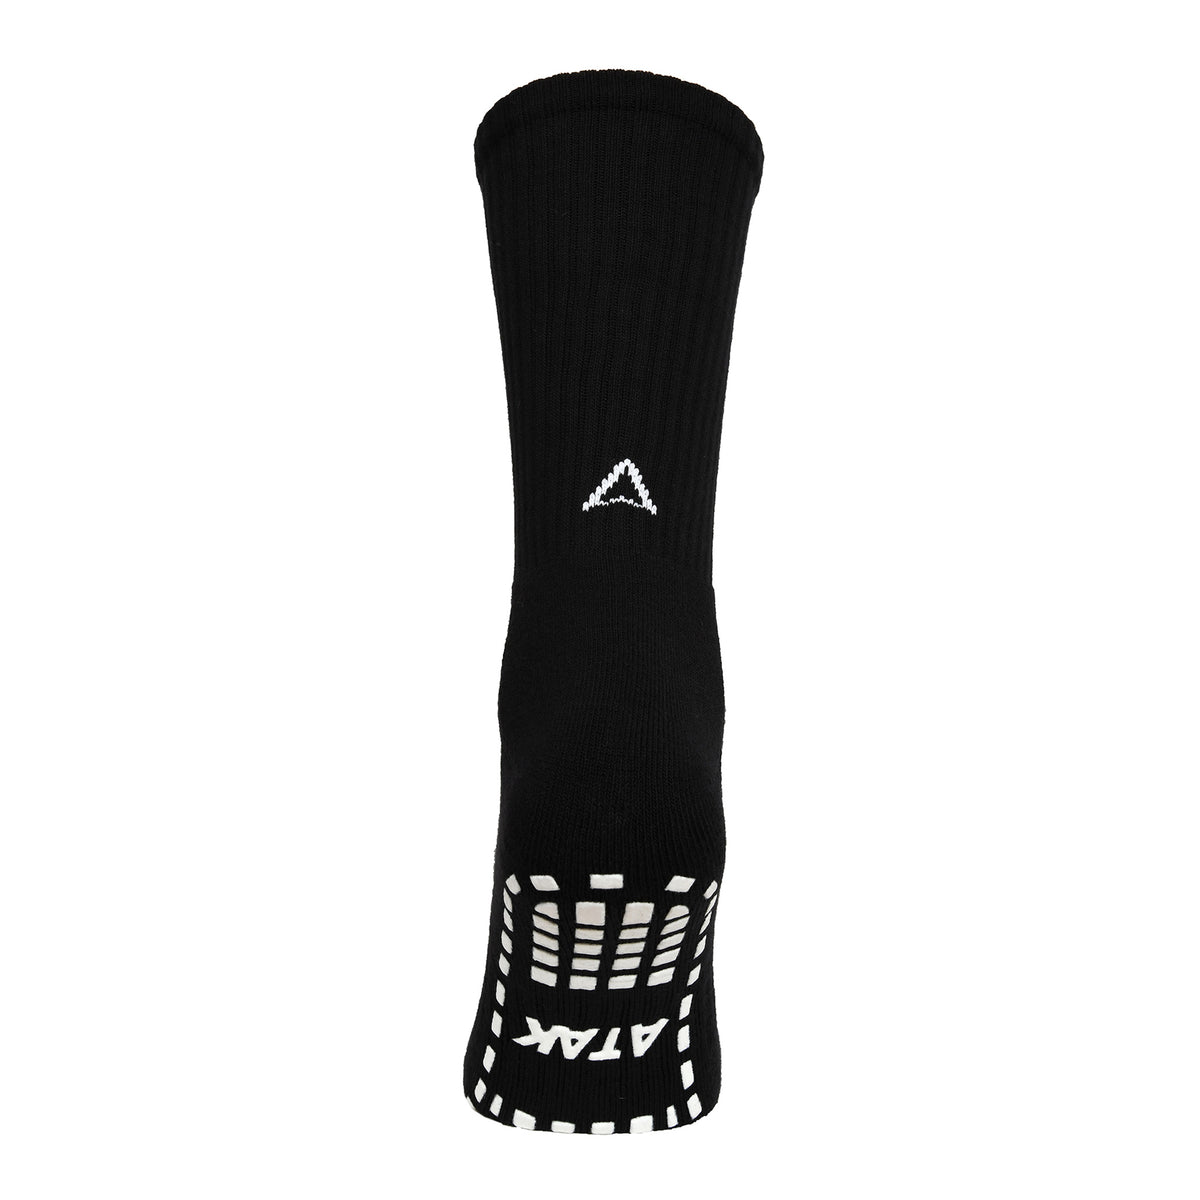 Atak Shox Midleg Grip Socks: Black